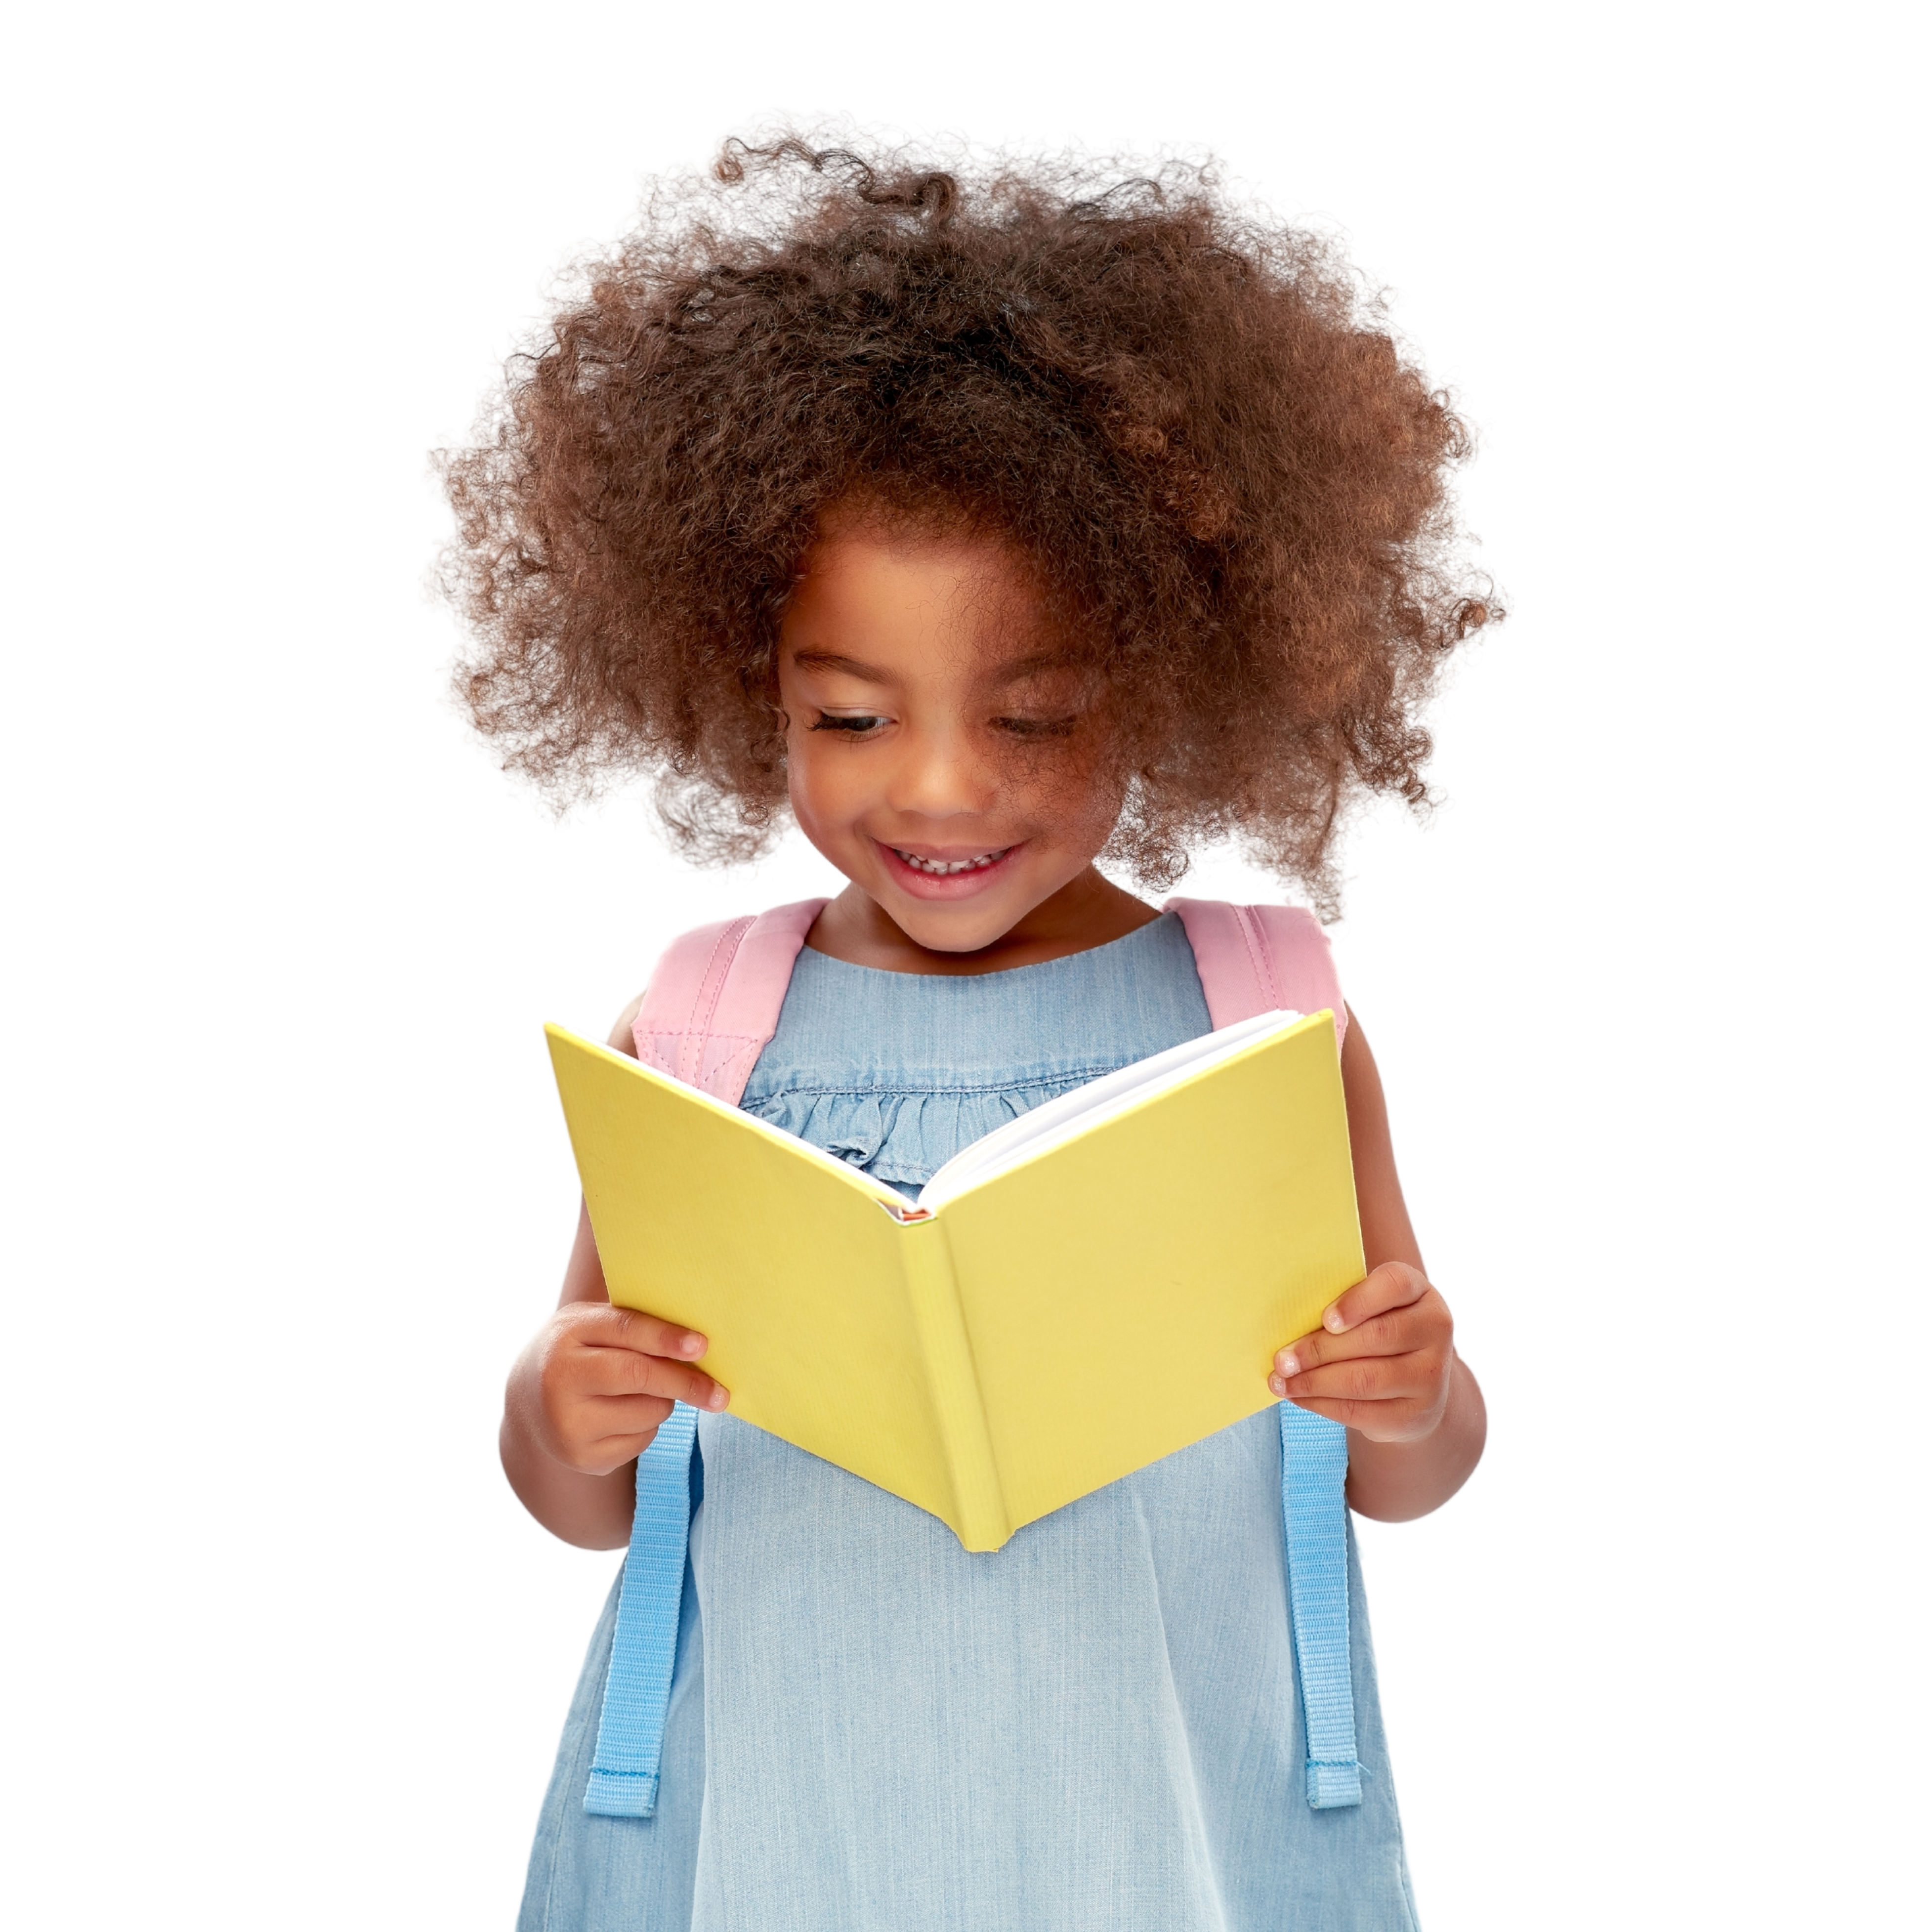 Little girl holding a yellow book